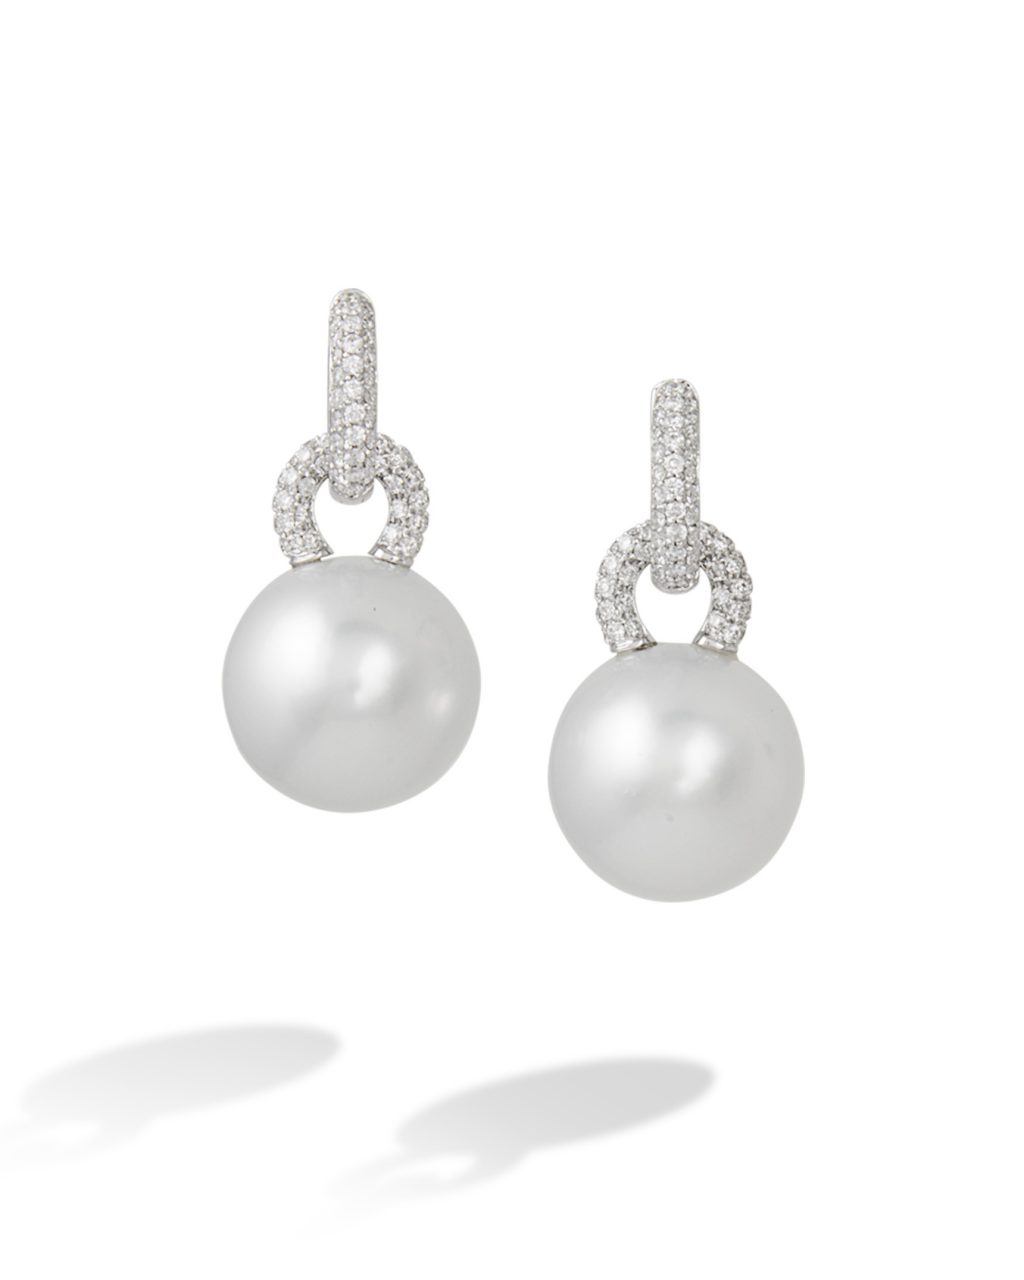 South Sea Pearl and Diamond Earrings - Turgeon Raine